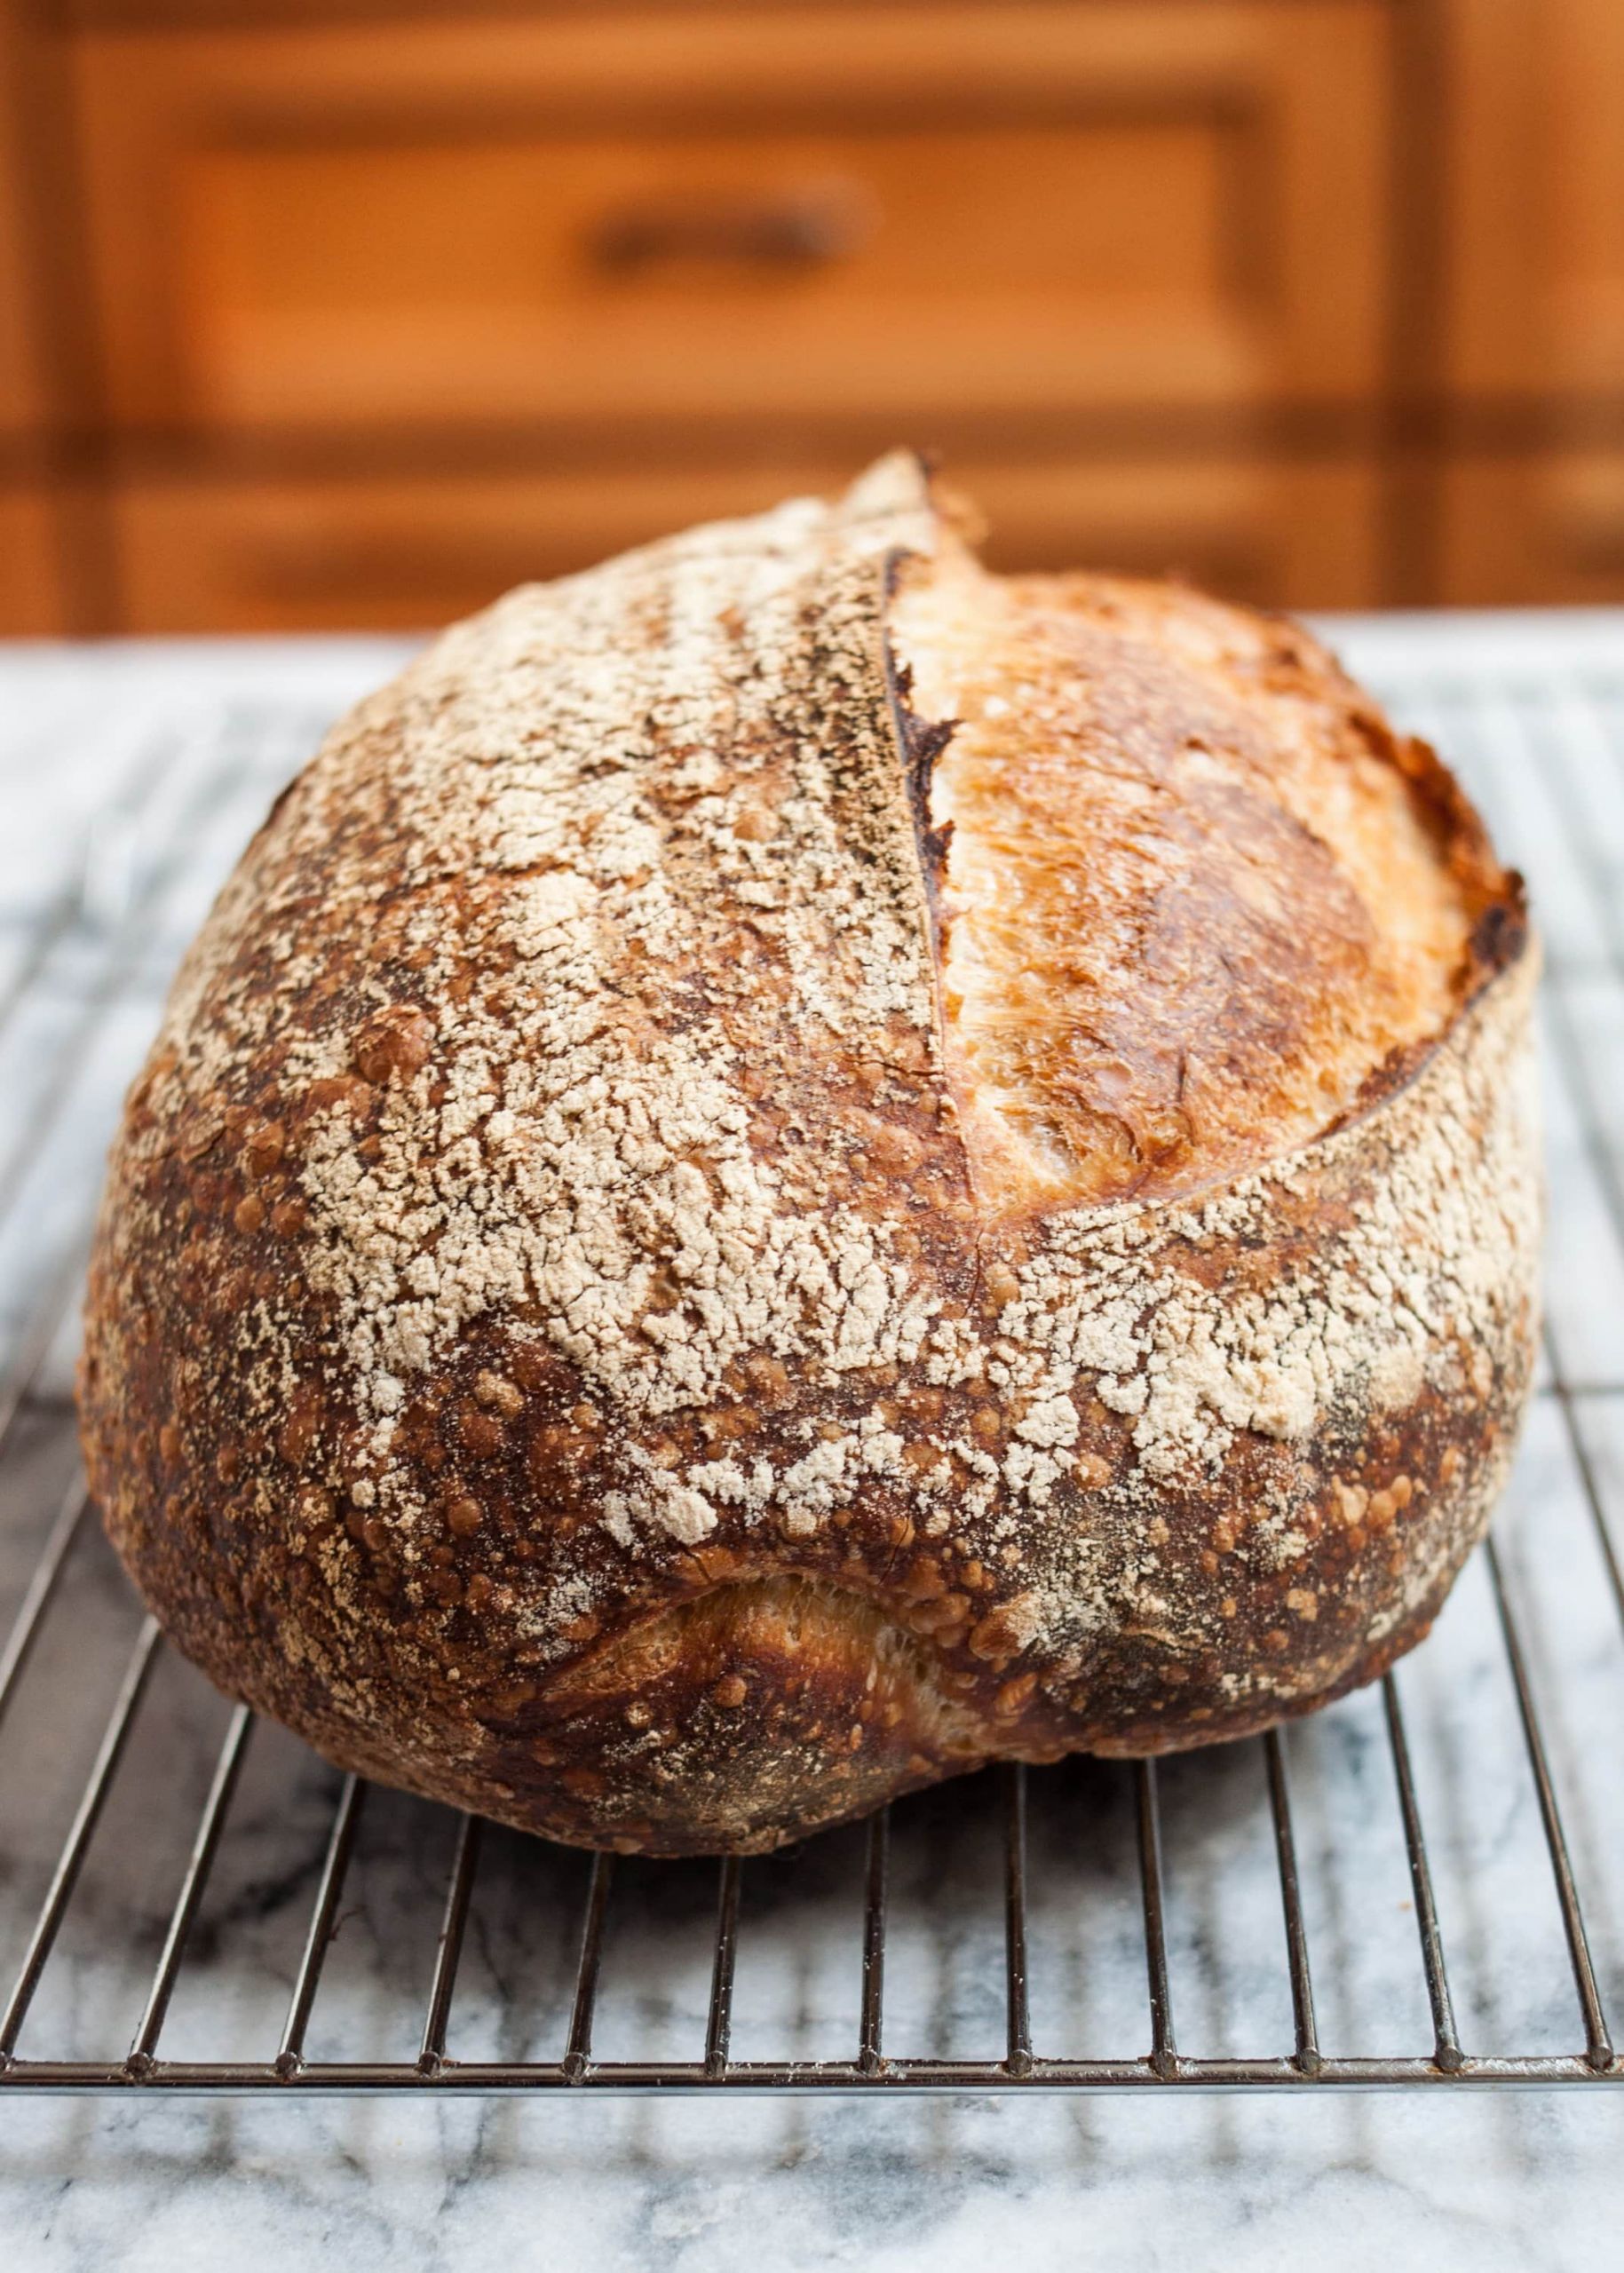 Making Sourdough Bread
 How To Make Sourdough Bread